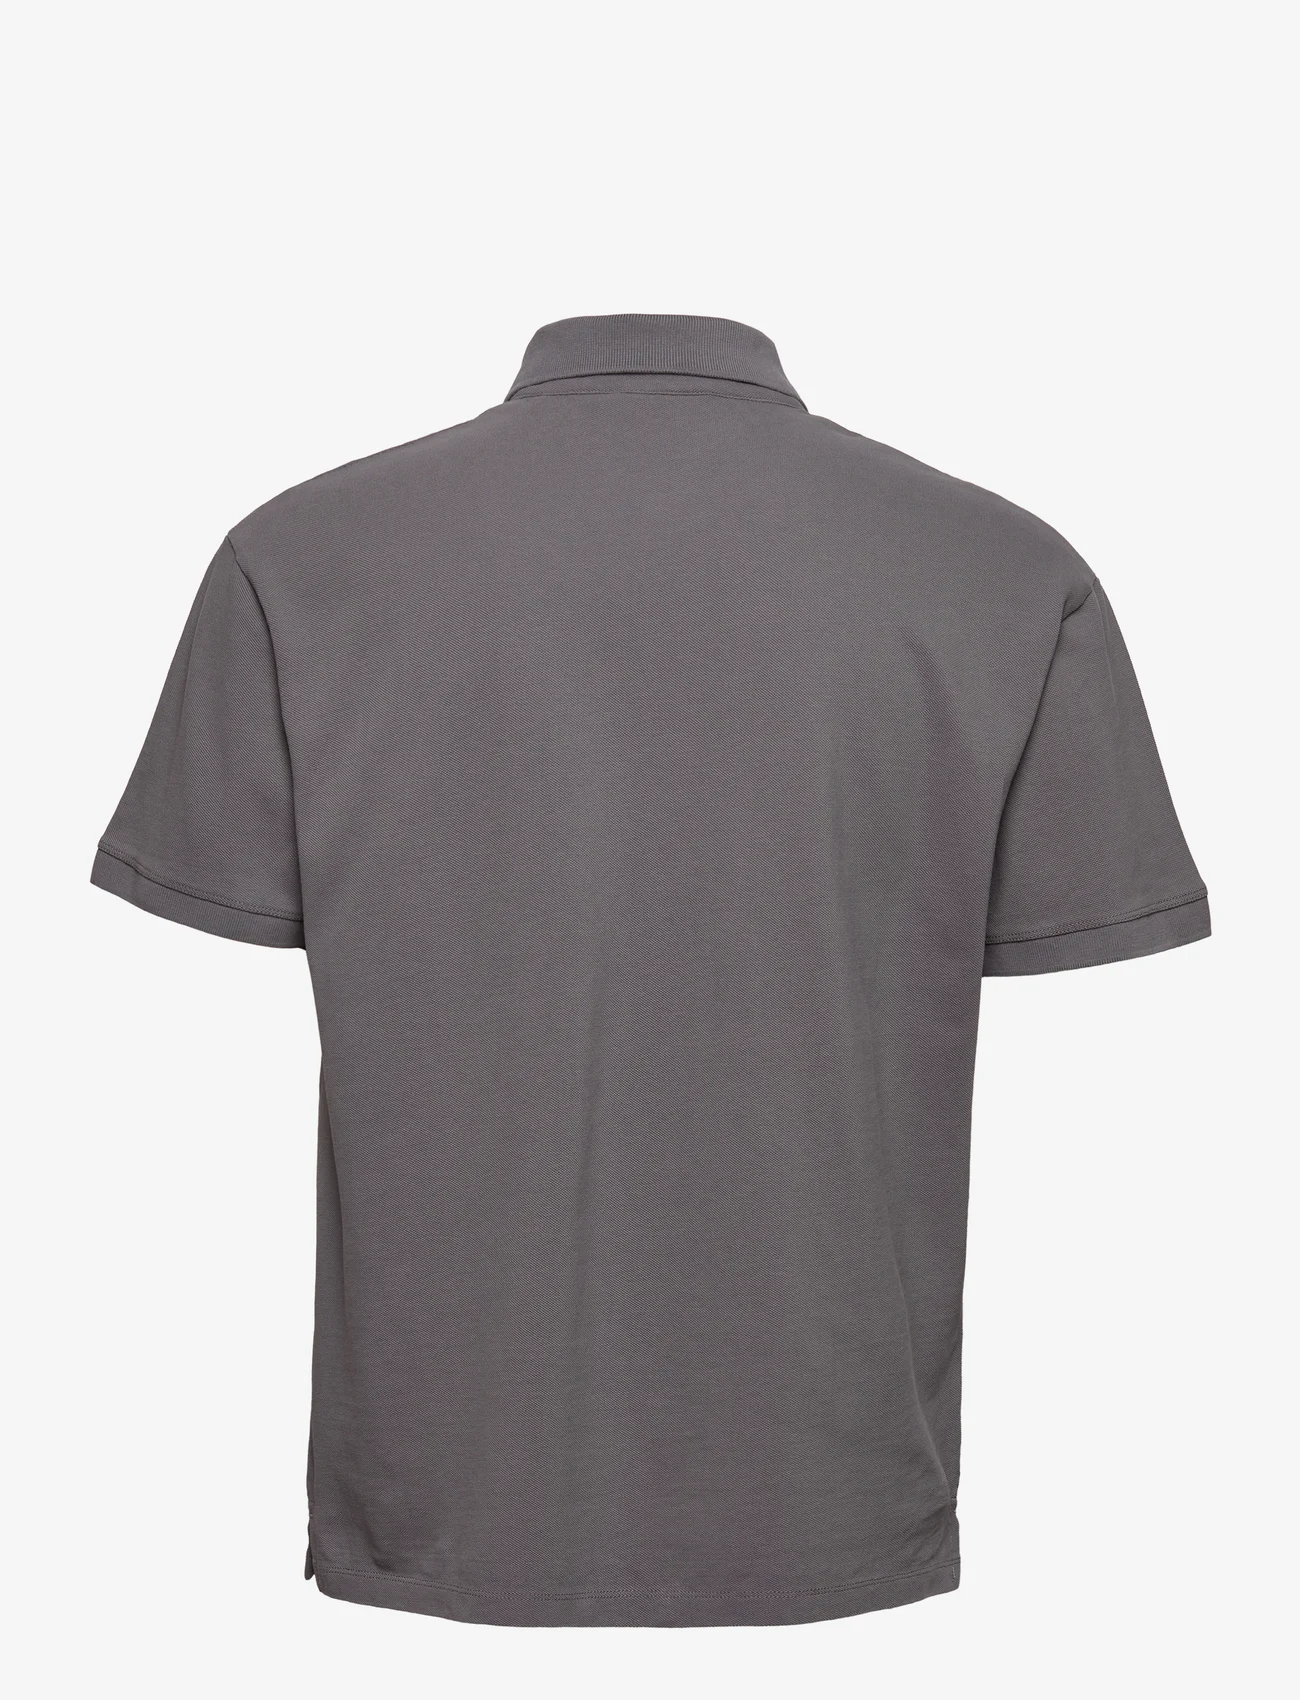 HAN Kjøbenhavn - Polo Shirt Short Sleeve - krótki rękaw - steel grey - 1